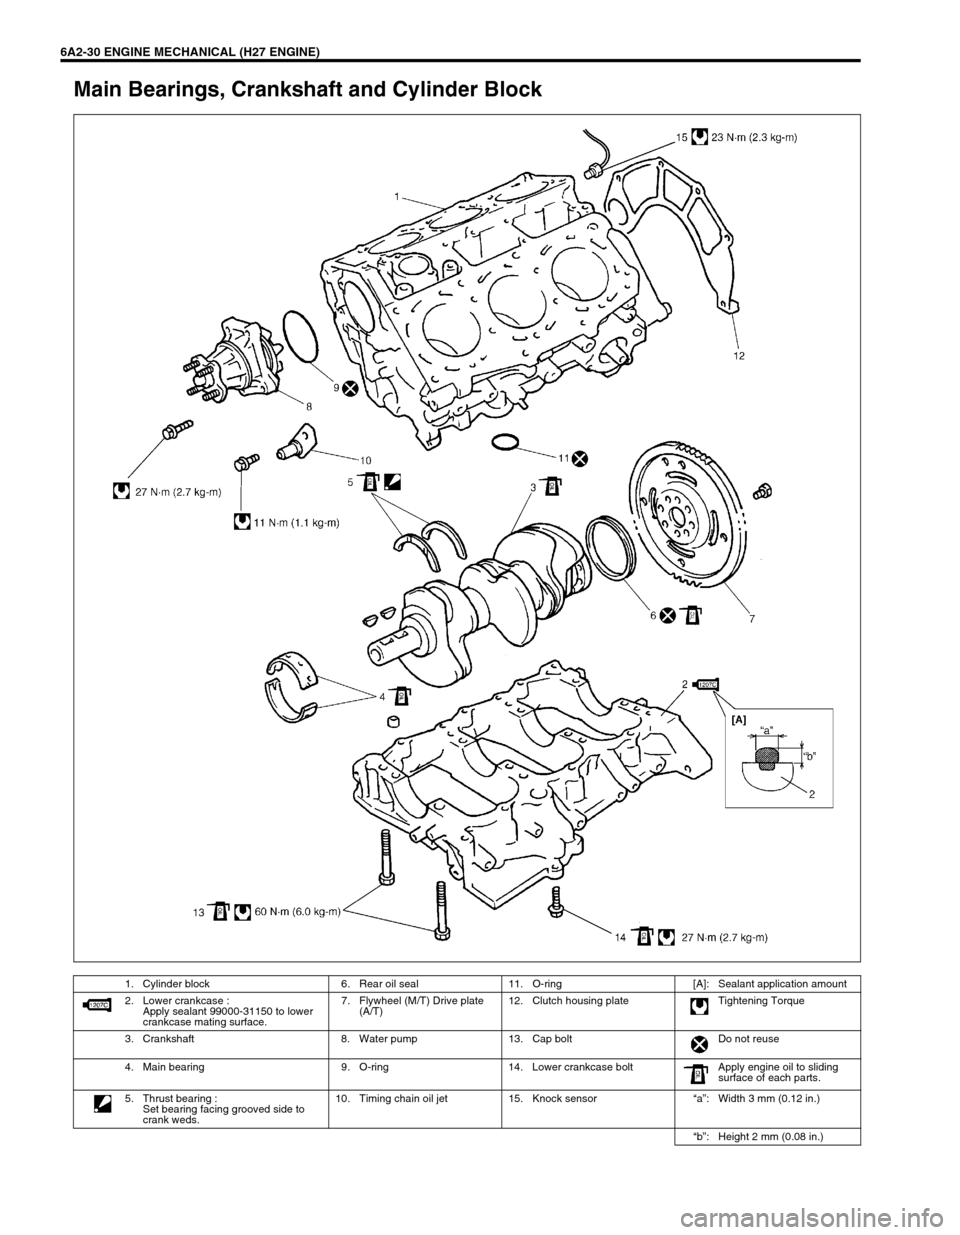 SUZUKI GRAND VITARA 2001 2.G Owners Manual 6A2-30 ENGINE MECHANICAL (H27 ENGINE)
Main Bearings, Crankshaft and Cylinder Block
1. Cylinder block 6. Rear oil seal 11. O-ring [A]: Sealant application amount
2. Lower crankcase :
Apply sealant 9900